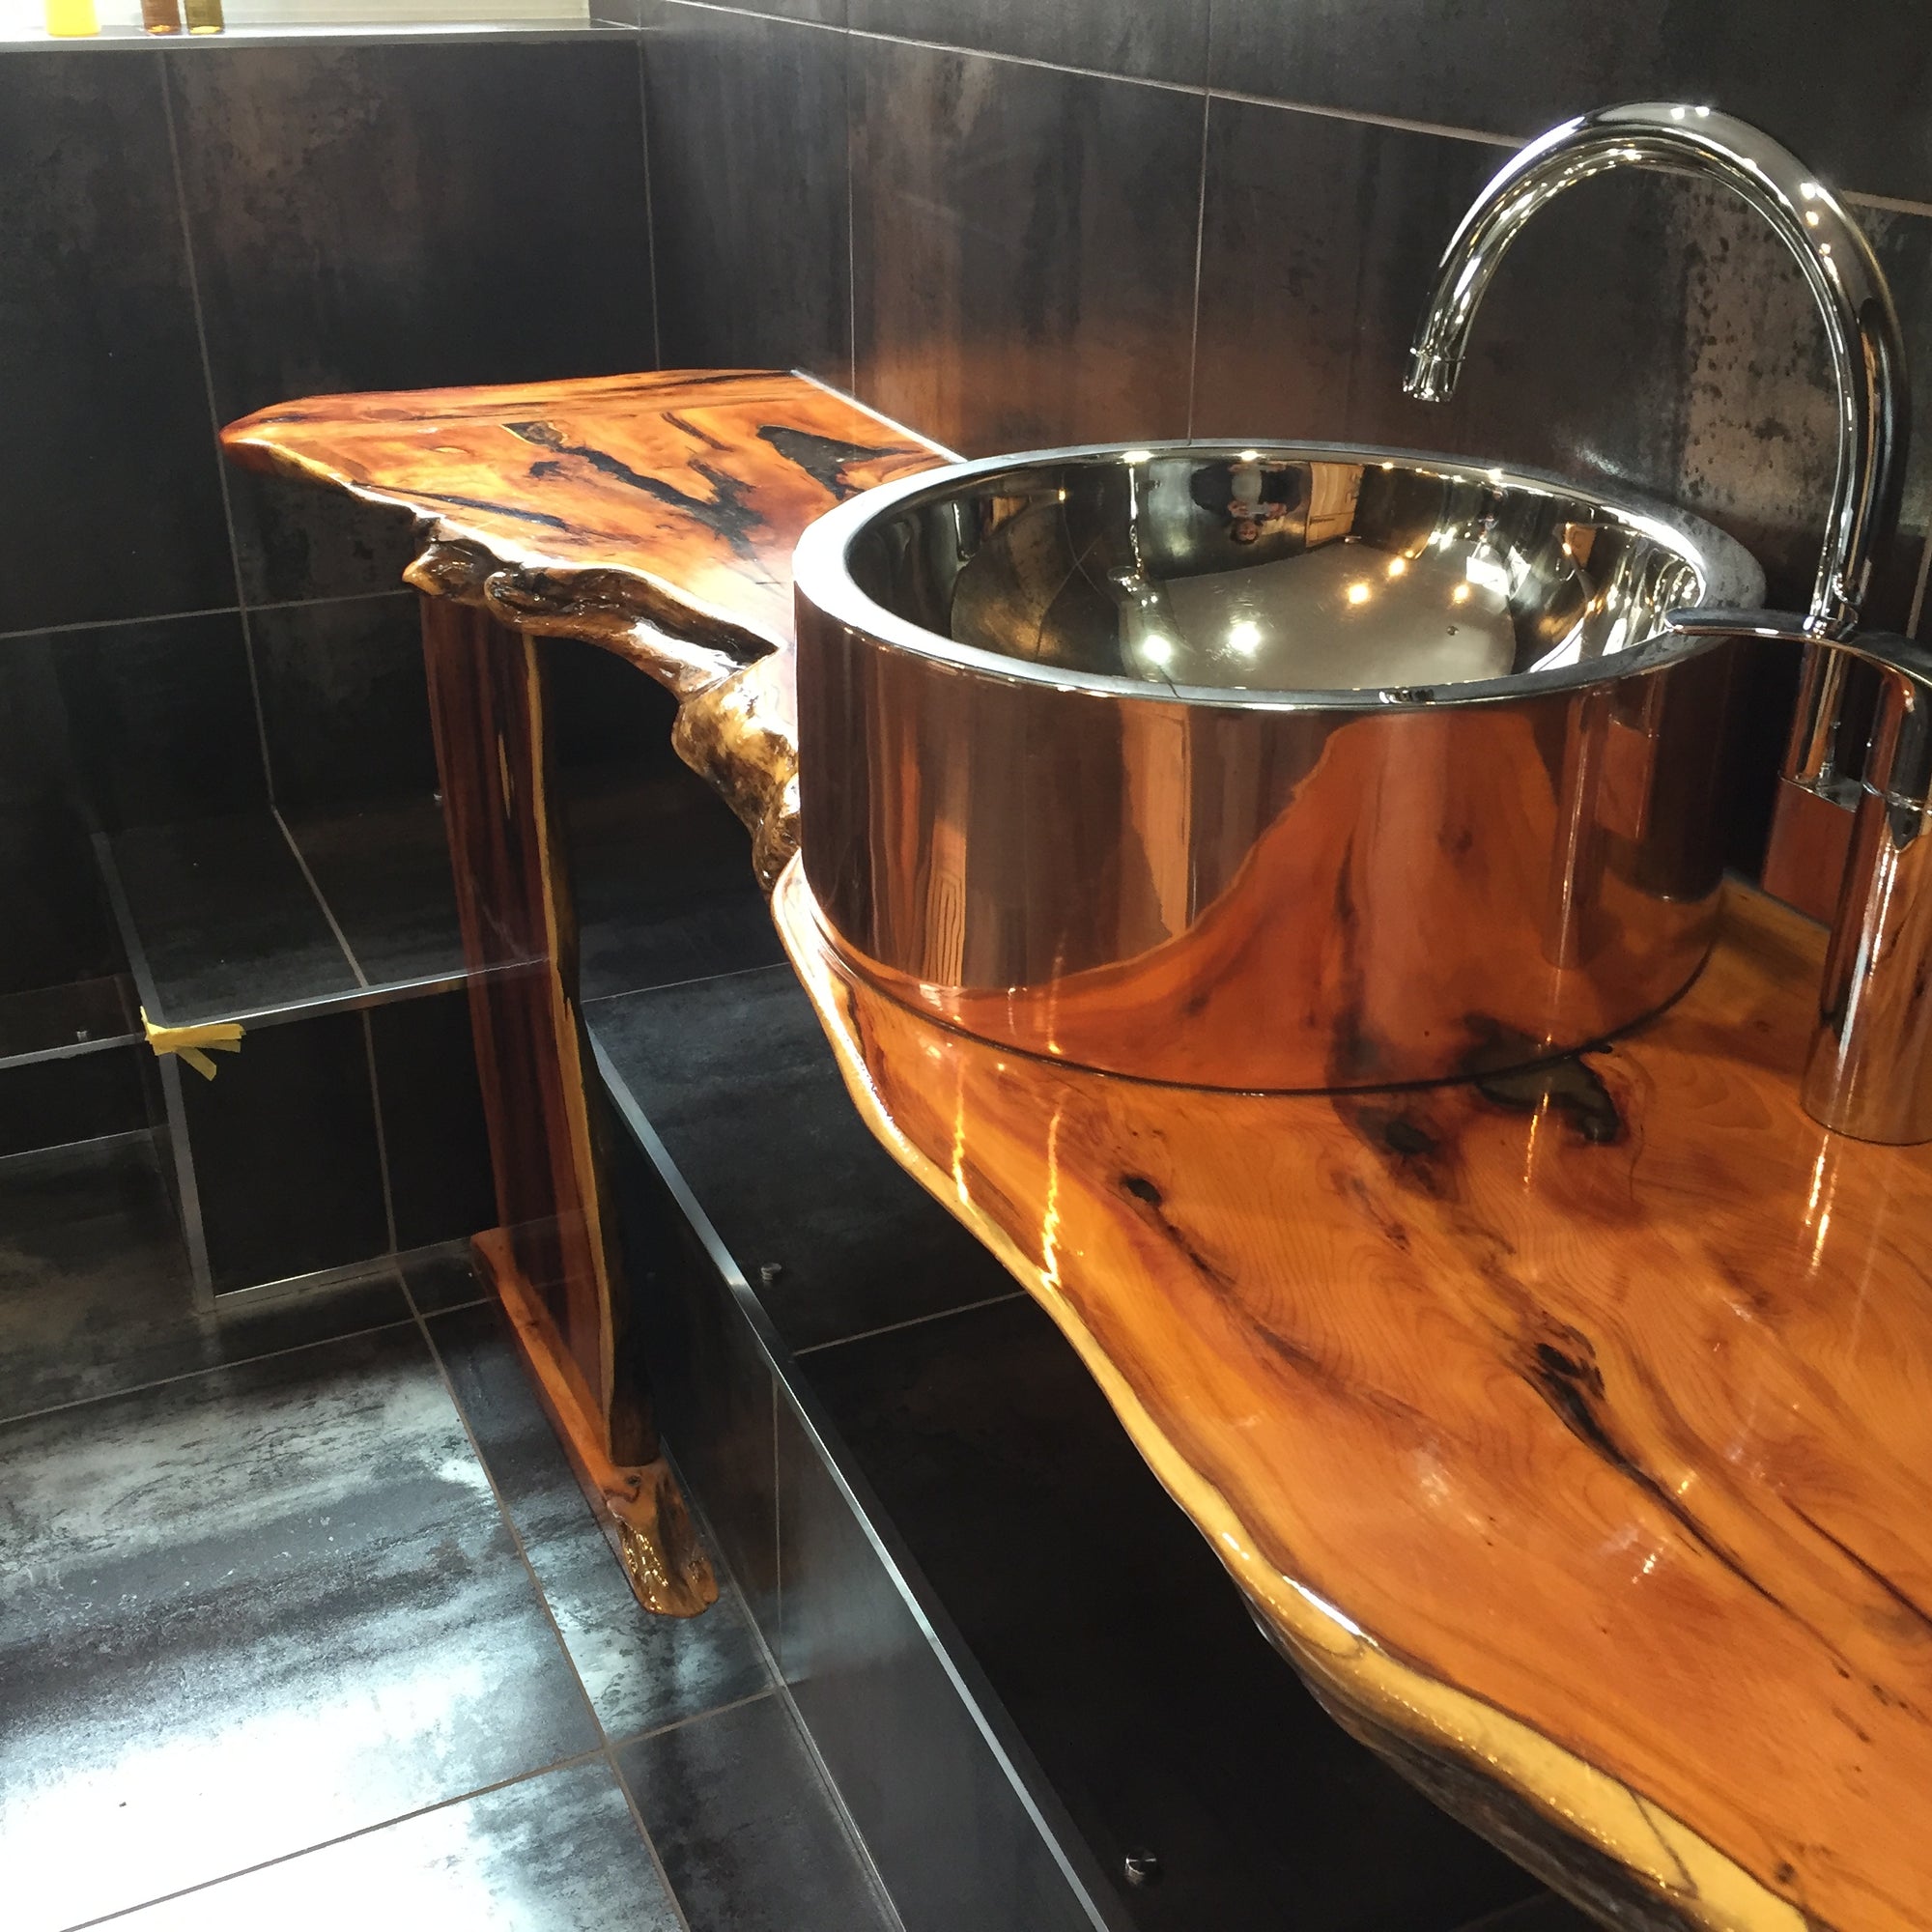 Bespoke Bathroom Project - Bespoke Natural Edged, Ancient Yew Bathroom Vanity worktop with Resin Detailing